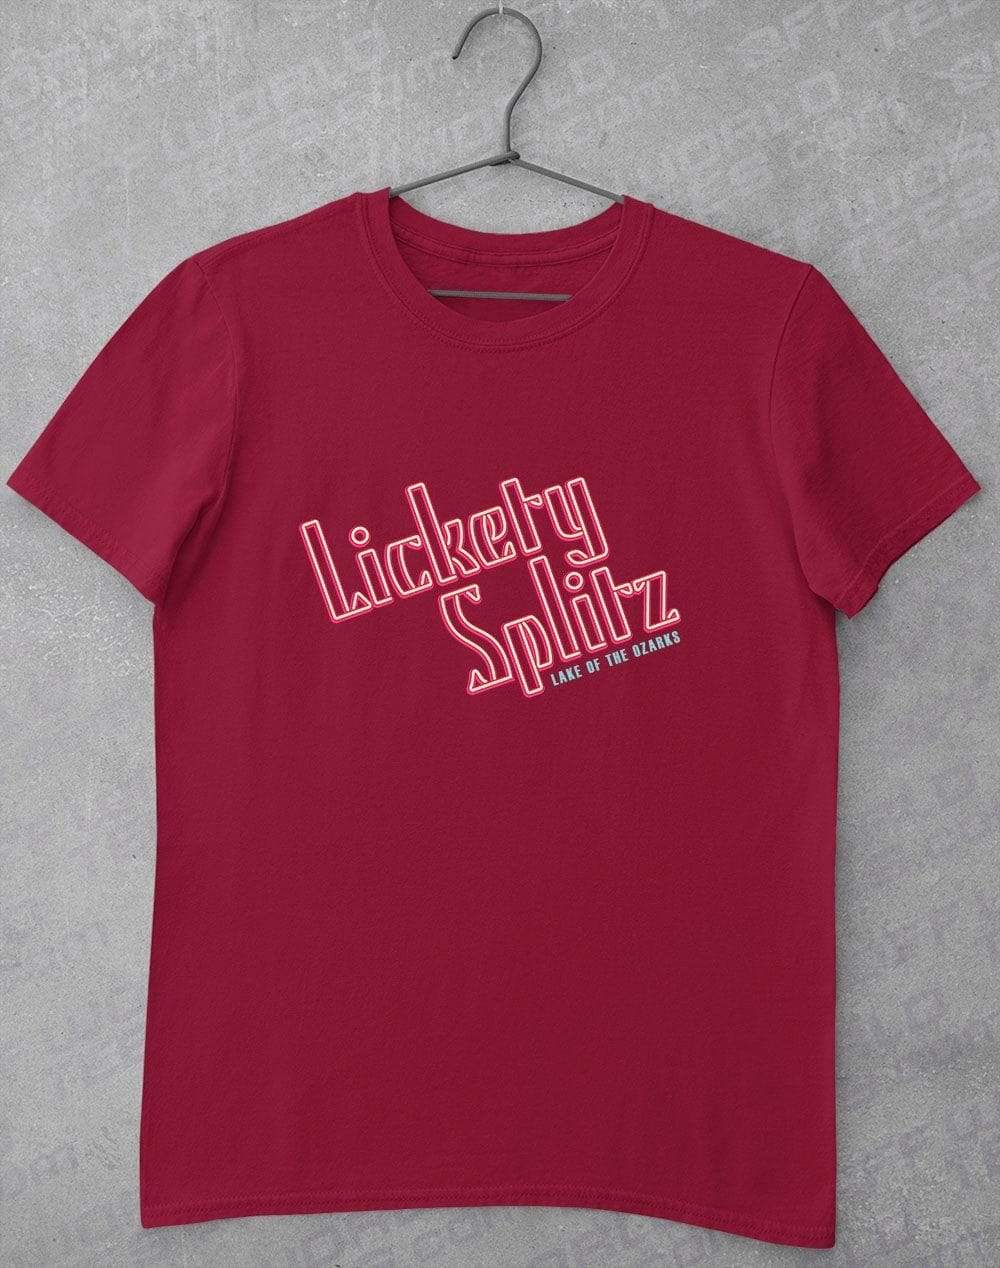 Lickety Splitz T-Shirt S / Cardinal Red  - Off World Tees